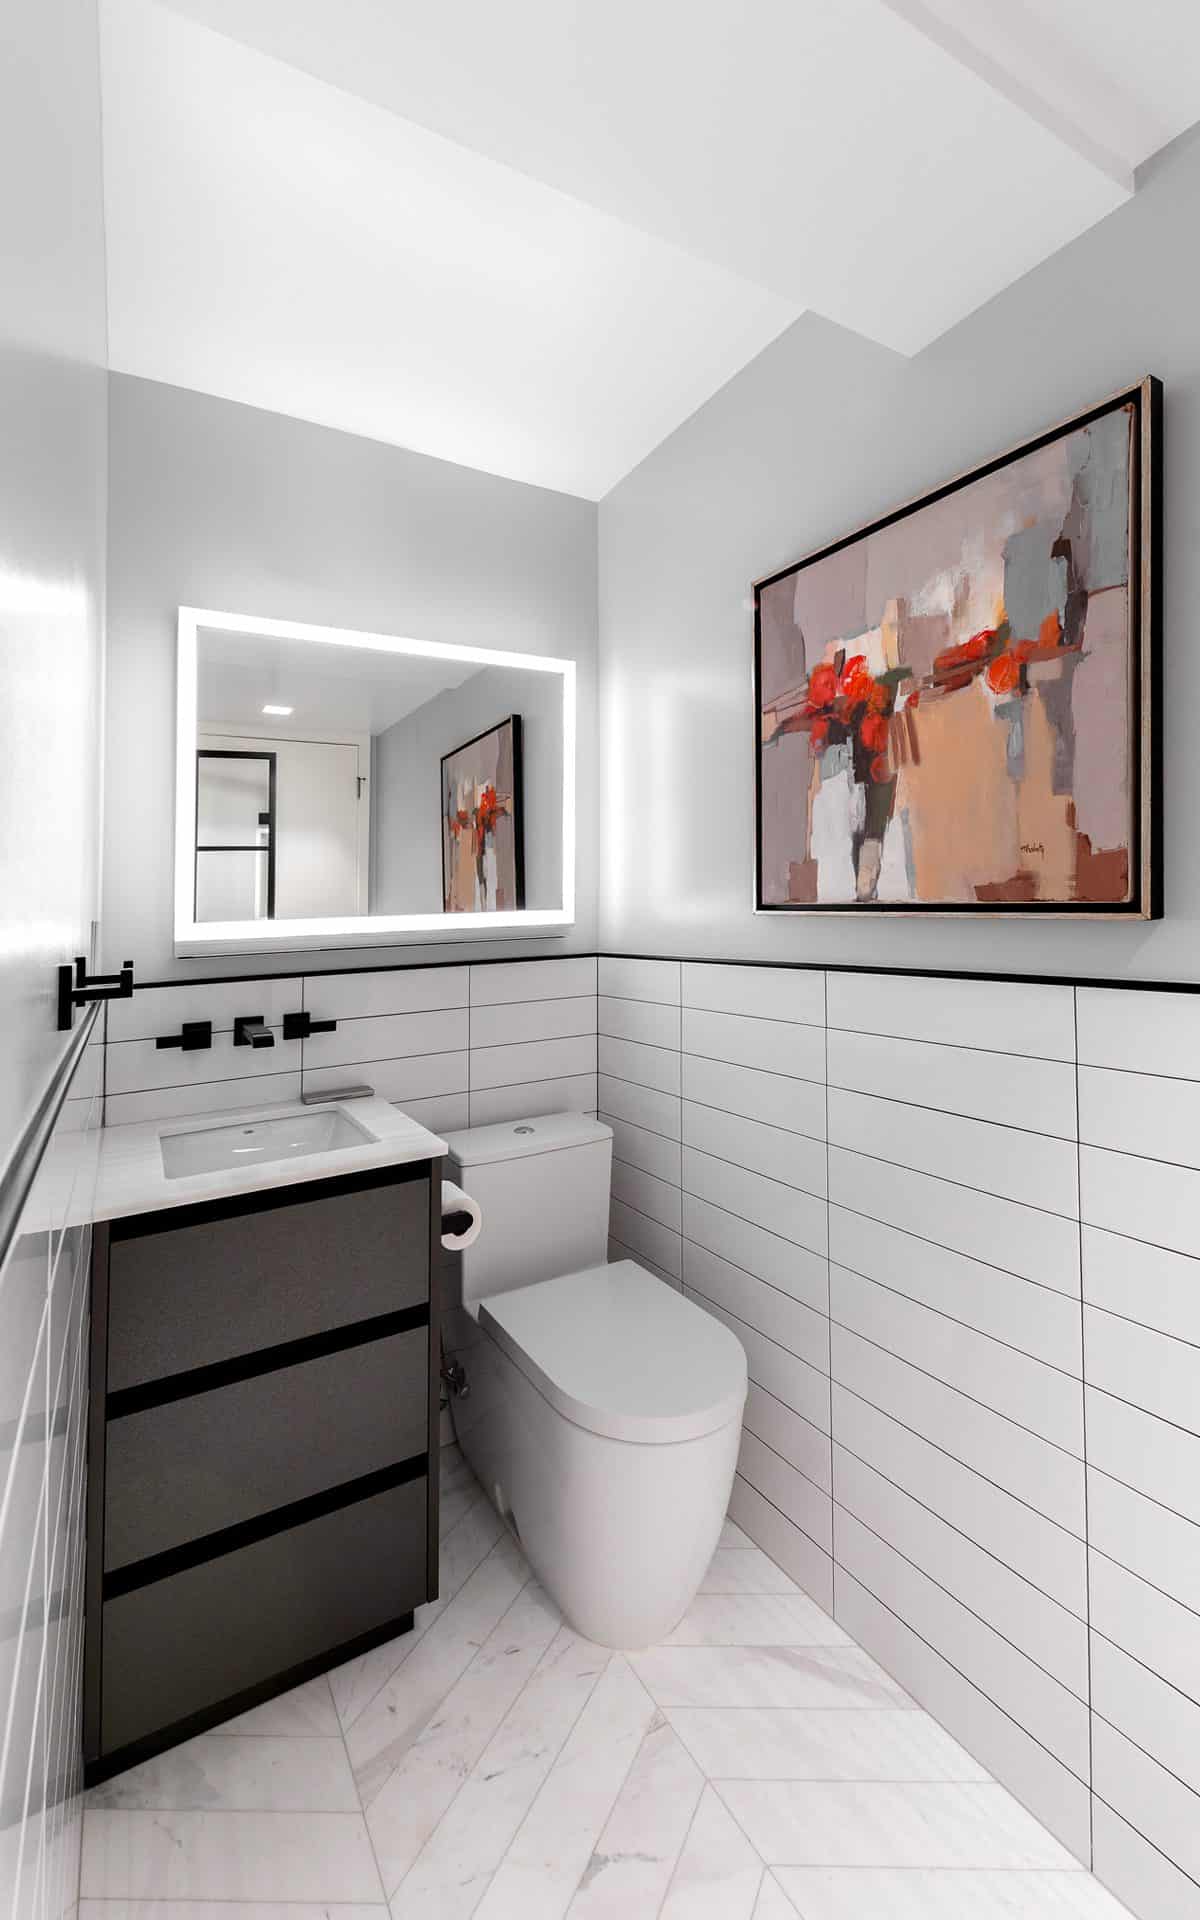 Modern bathroom features modern white appliances, black cabinetry, white chevron floor tiles and modern lighting.